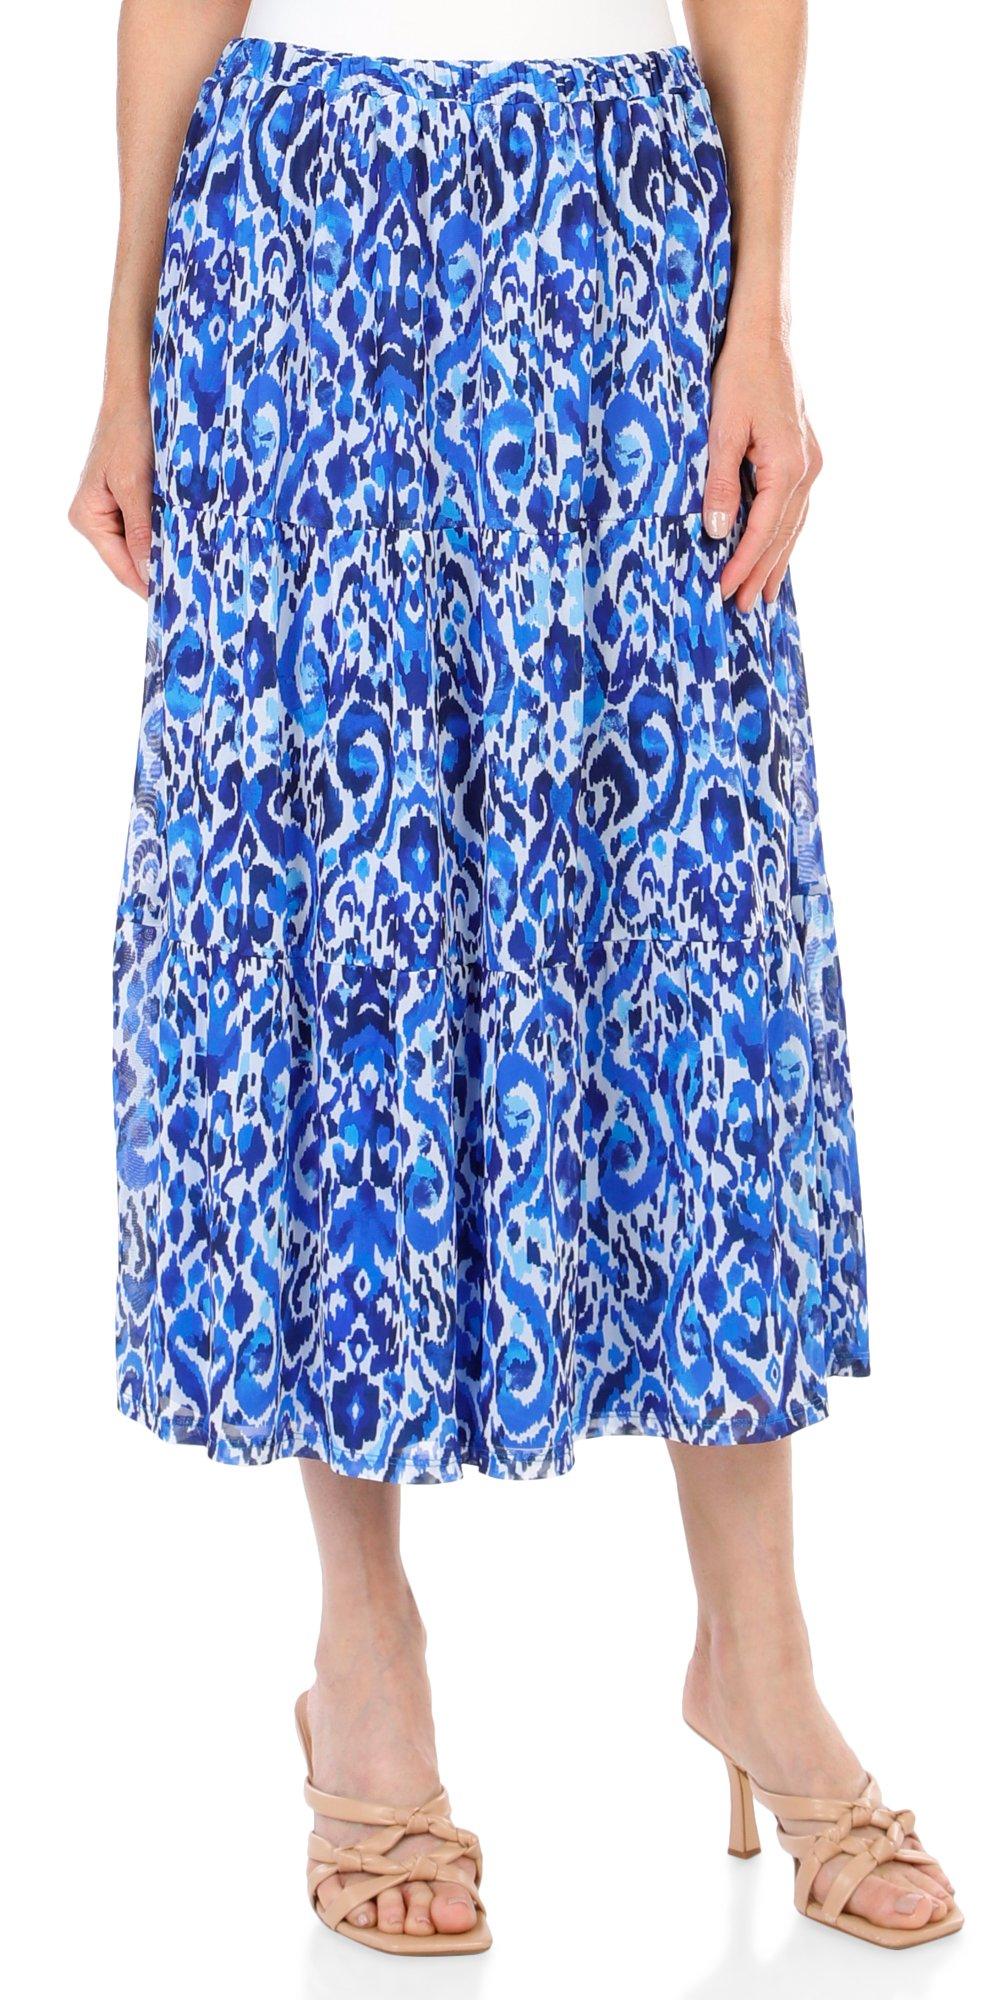 Women's Tie Dye Print Skirt